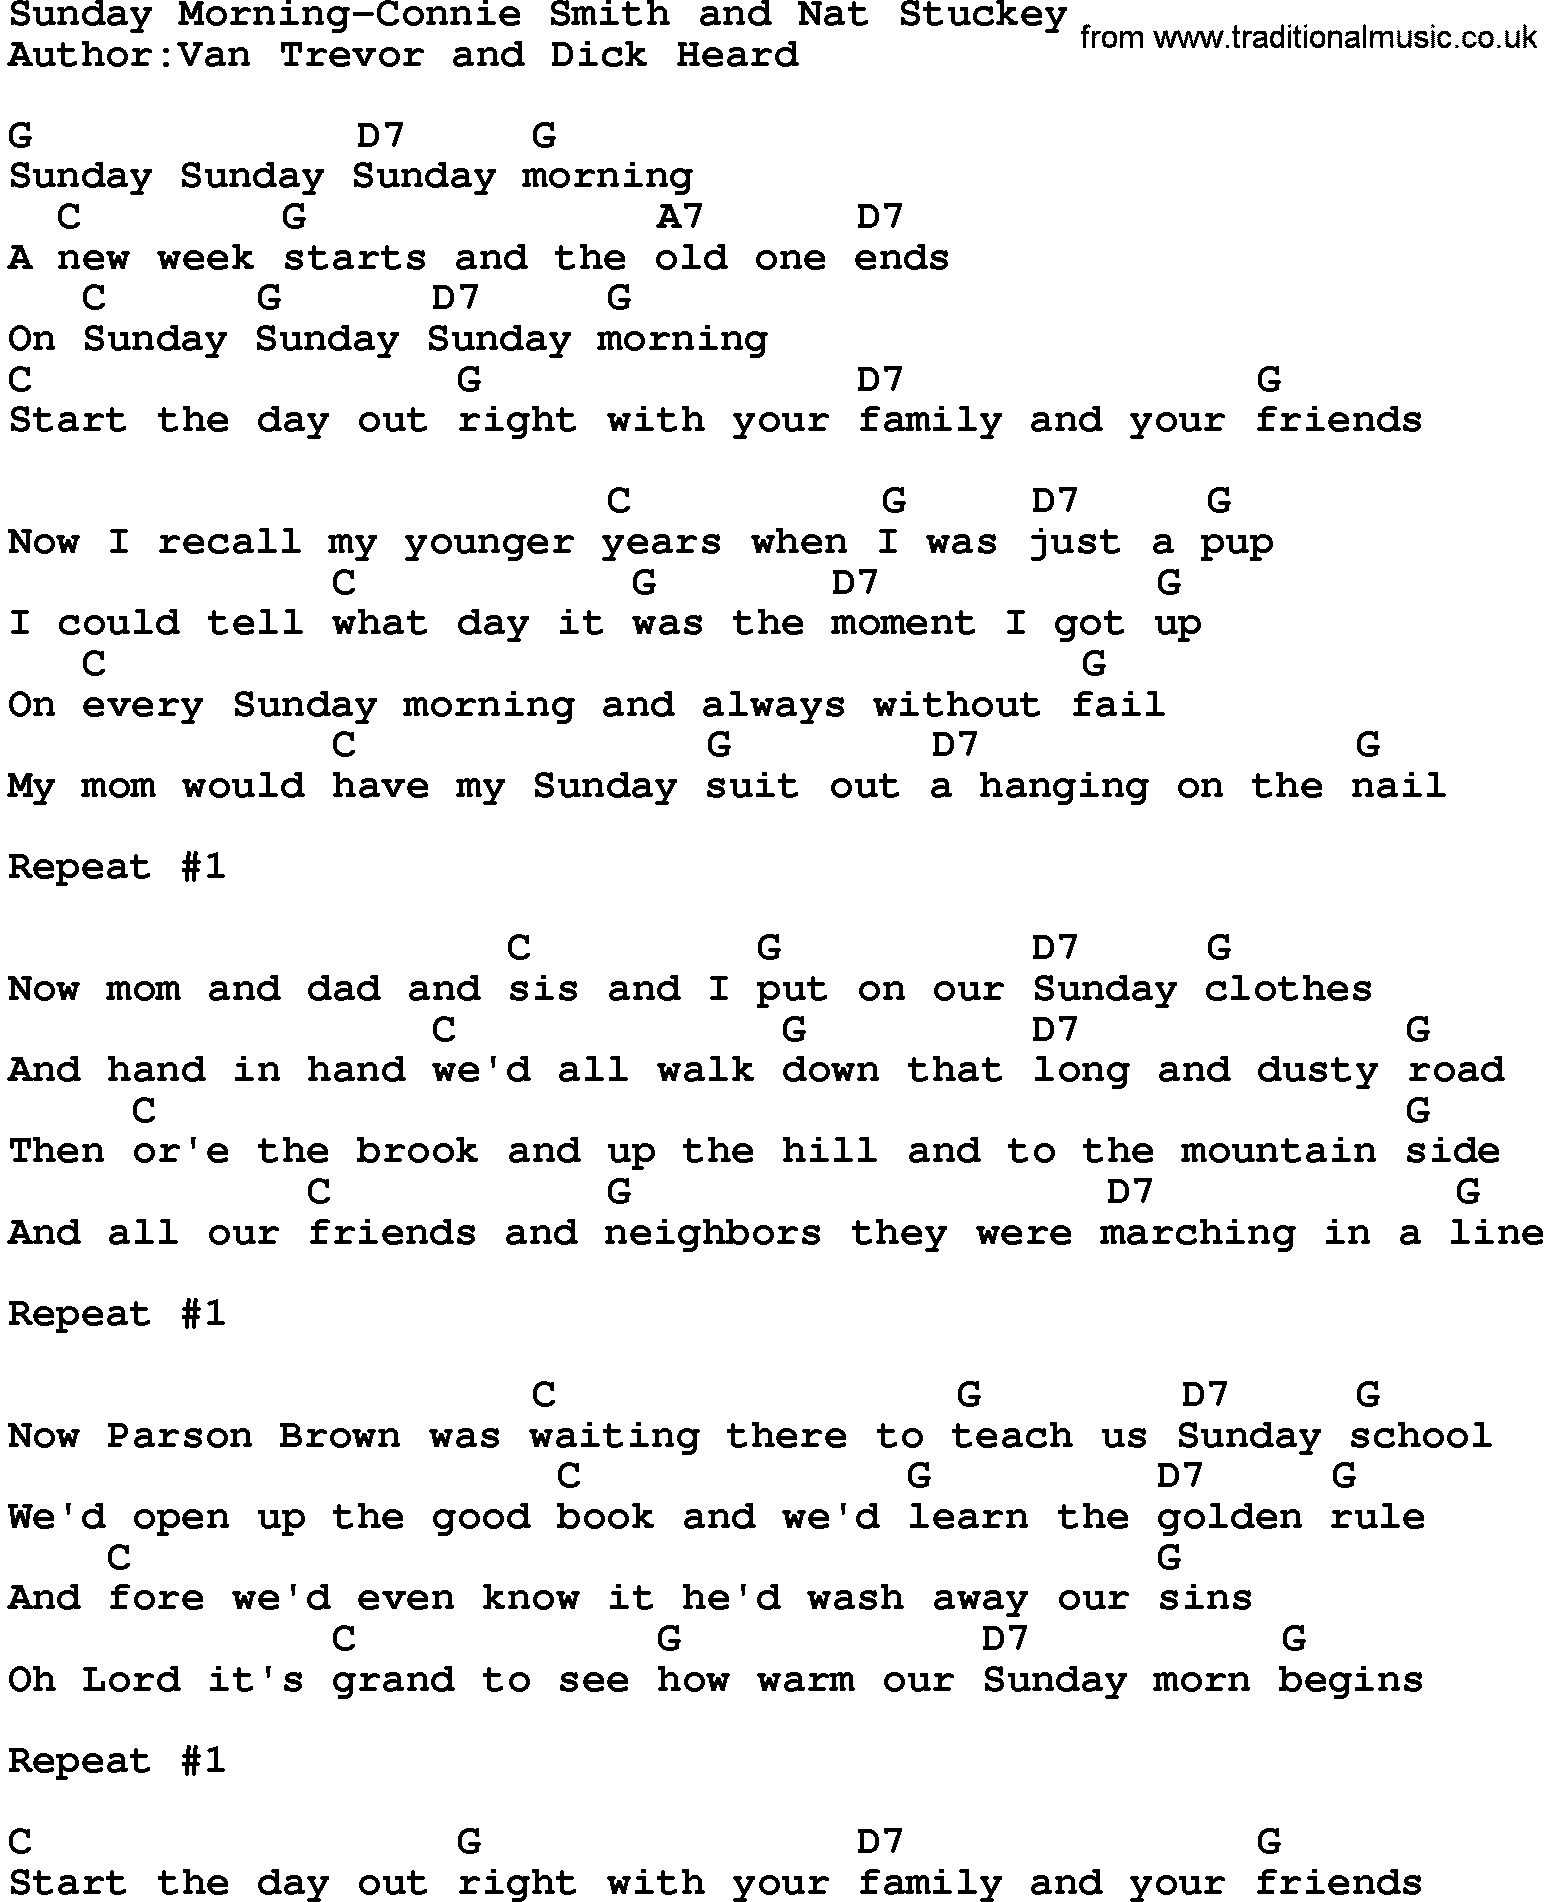 Sunday Morning Chords Country Musicsunday Morning Connie Smith And Nat Stuckey Lyrics And